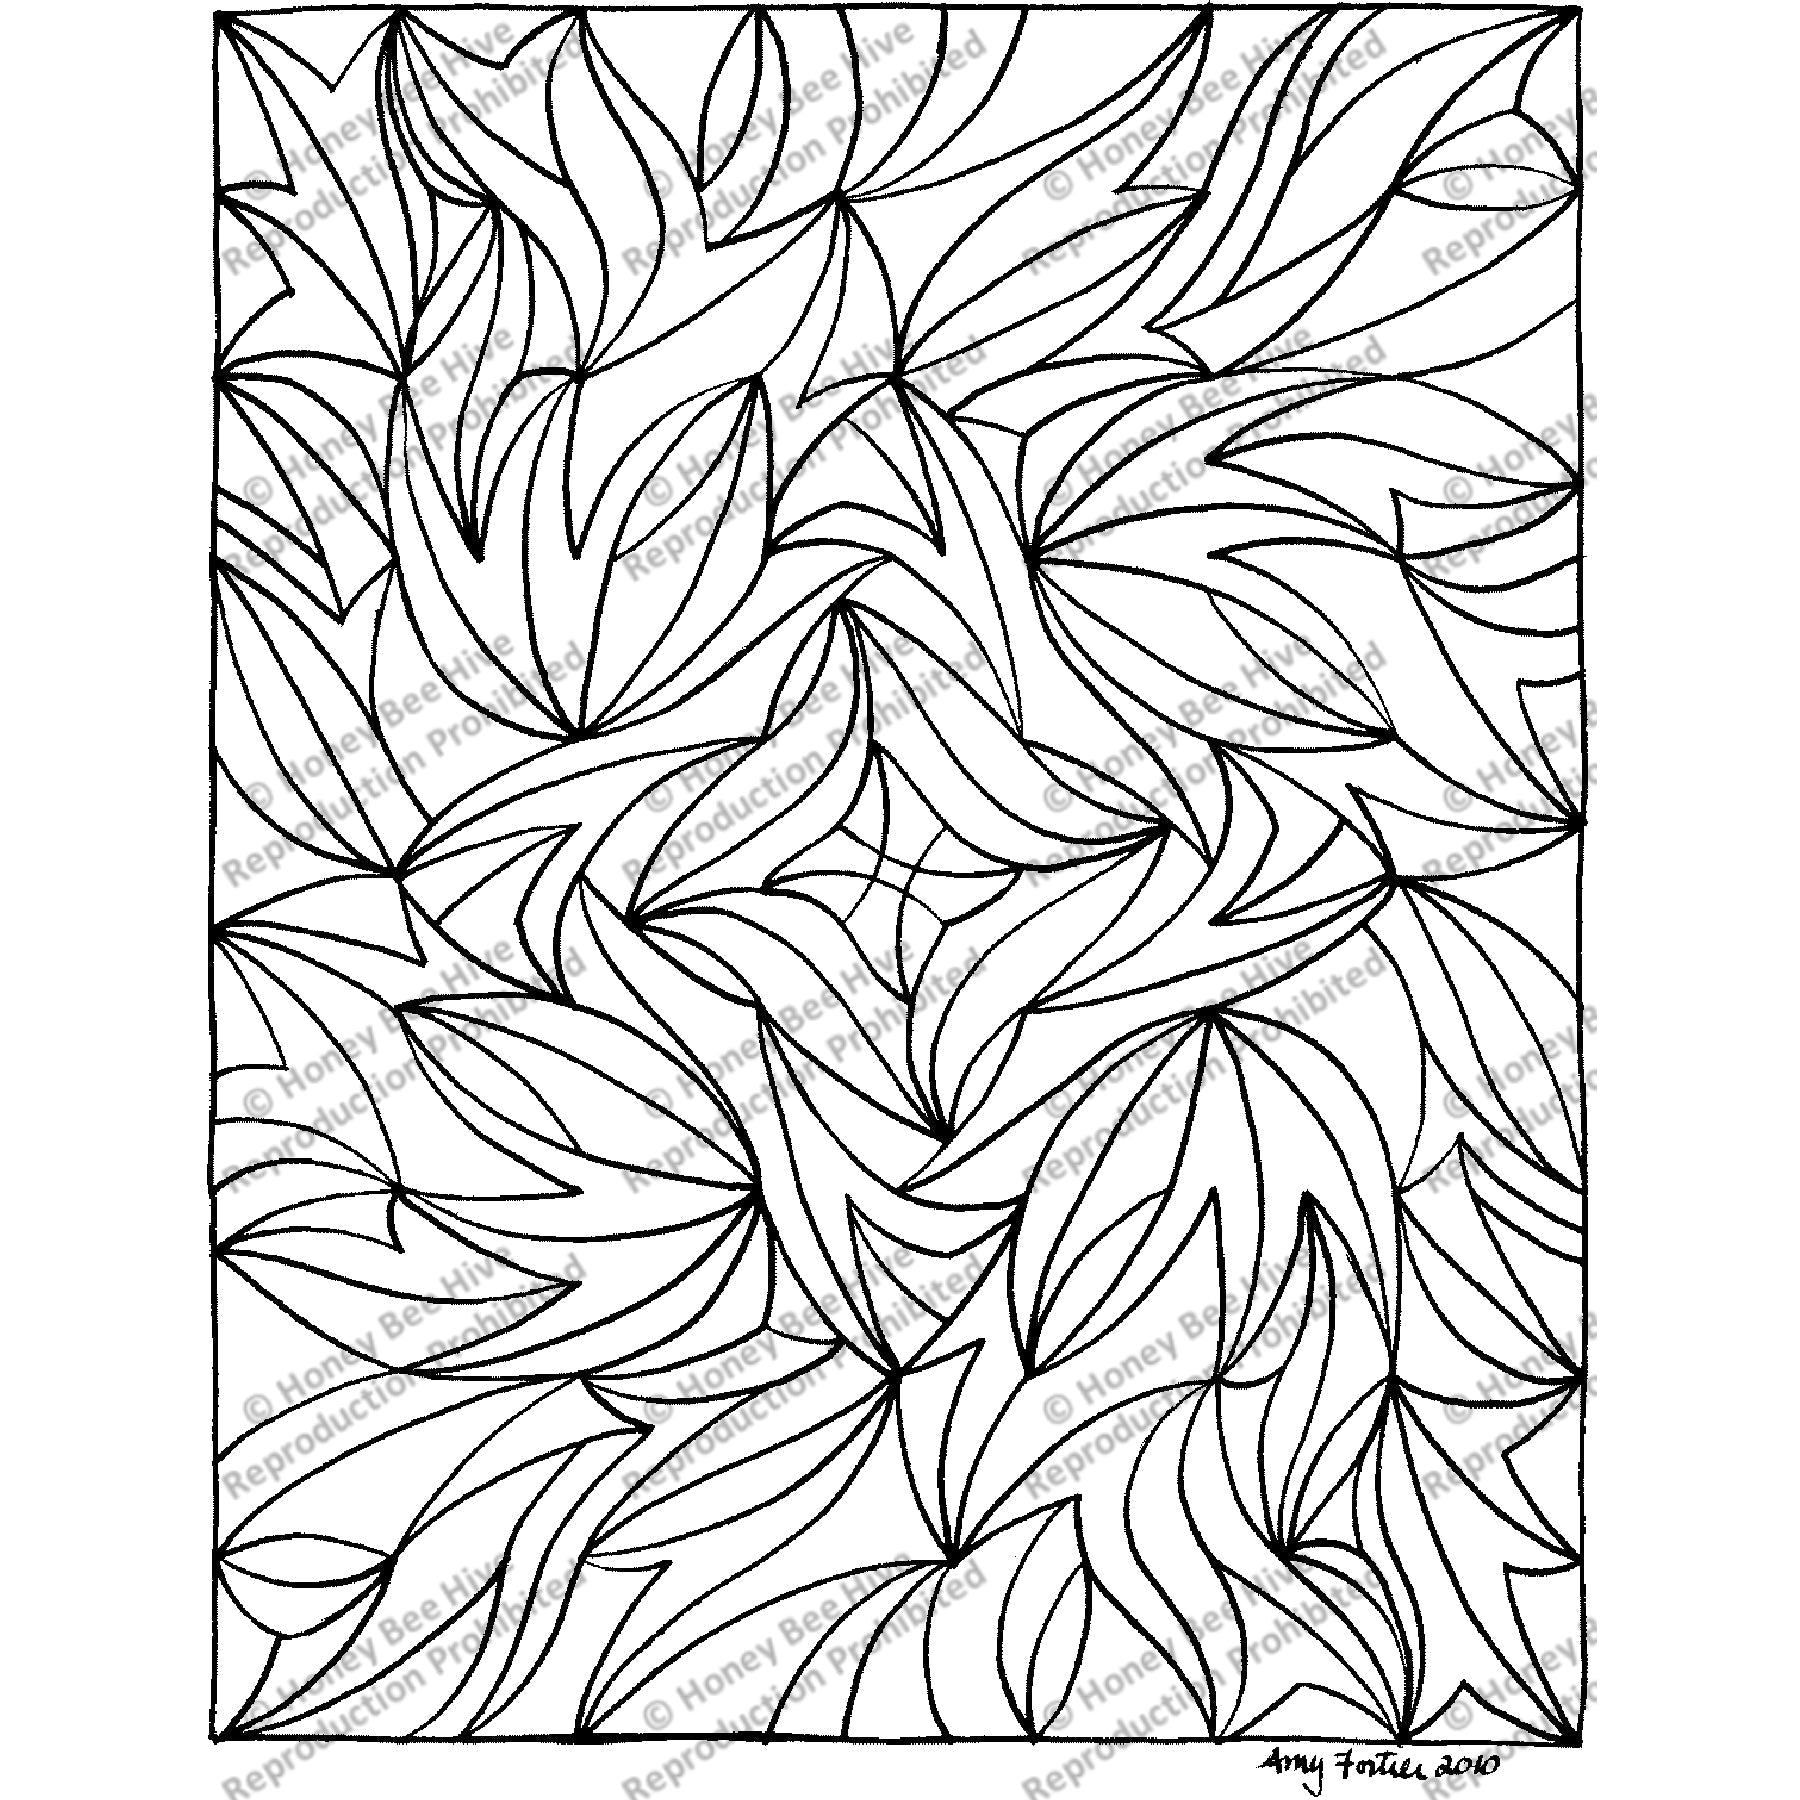 Echeveria, rug hooking pattern